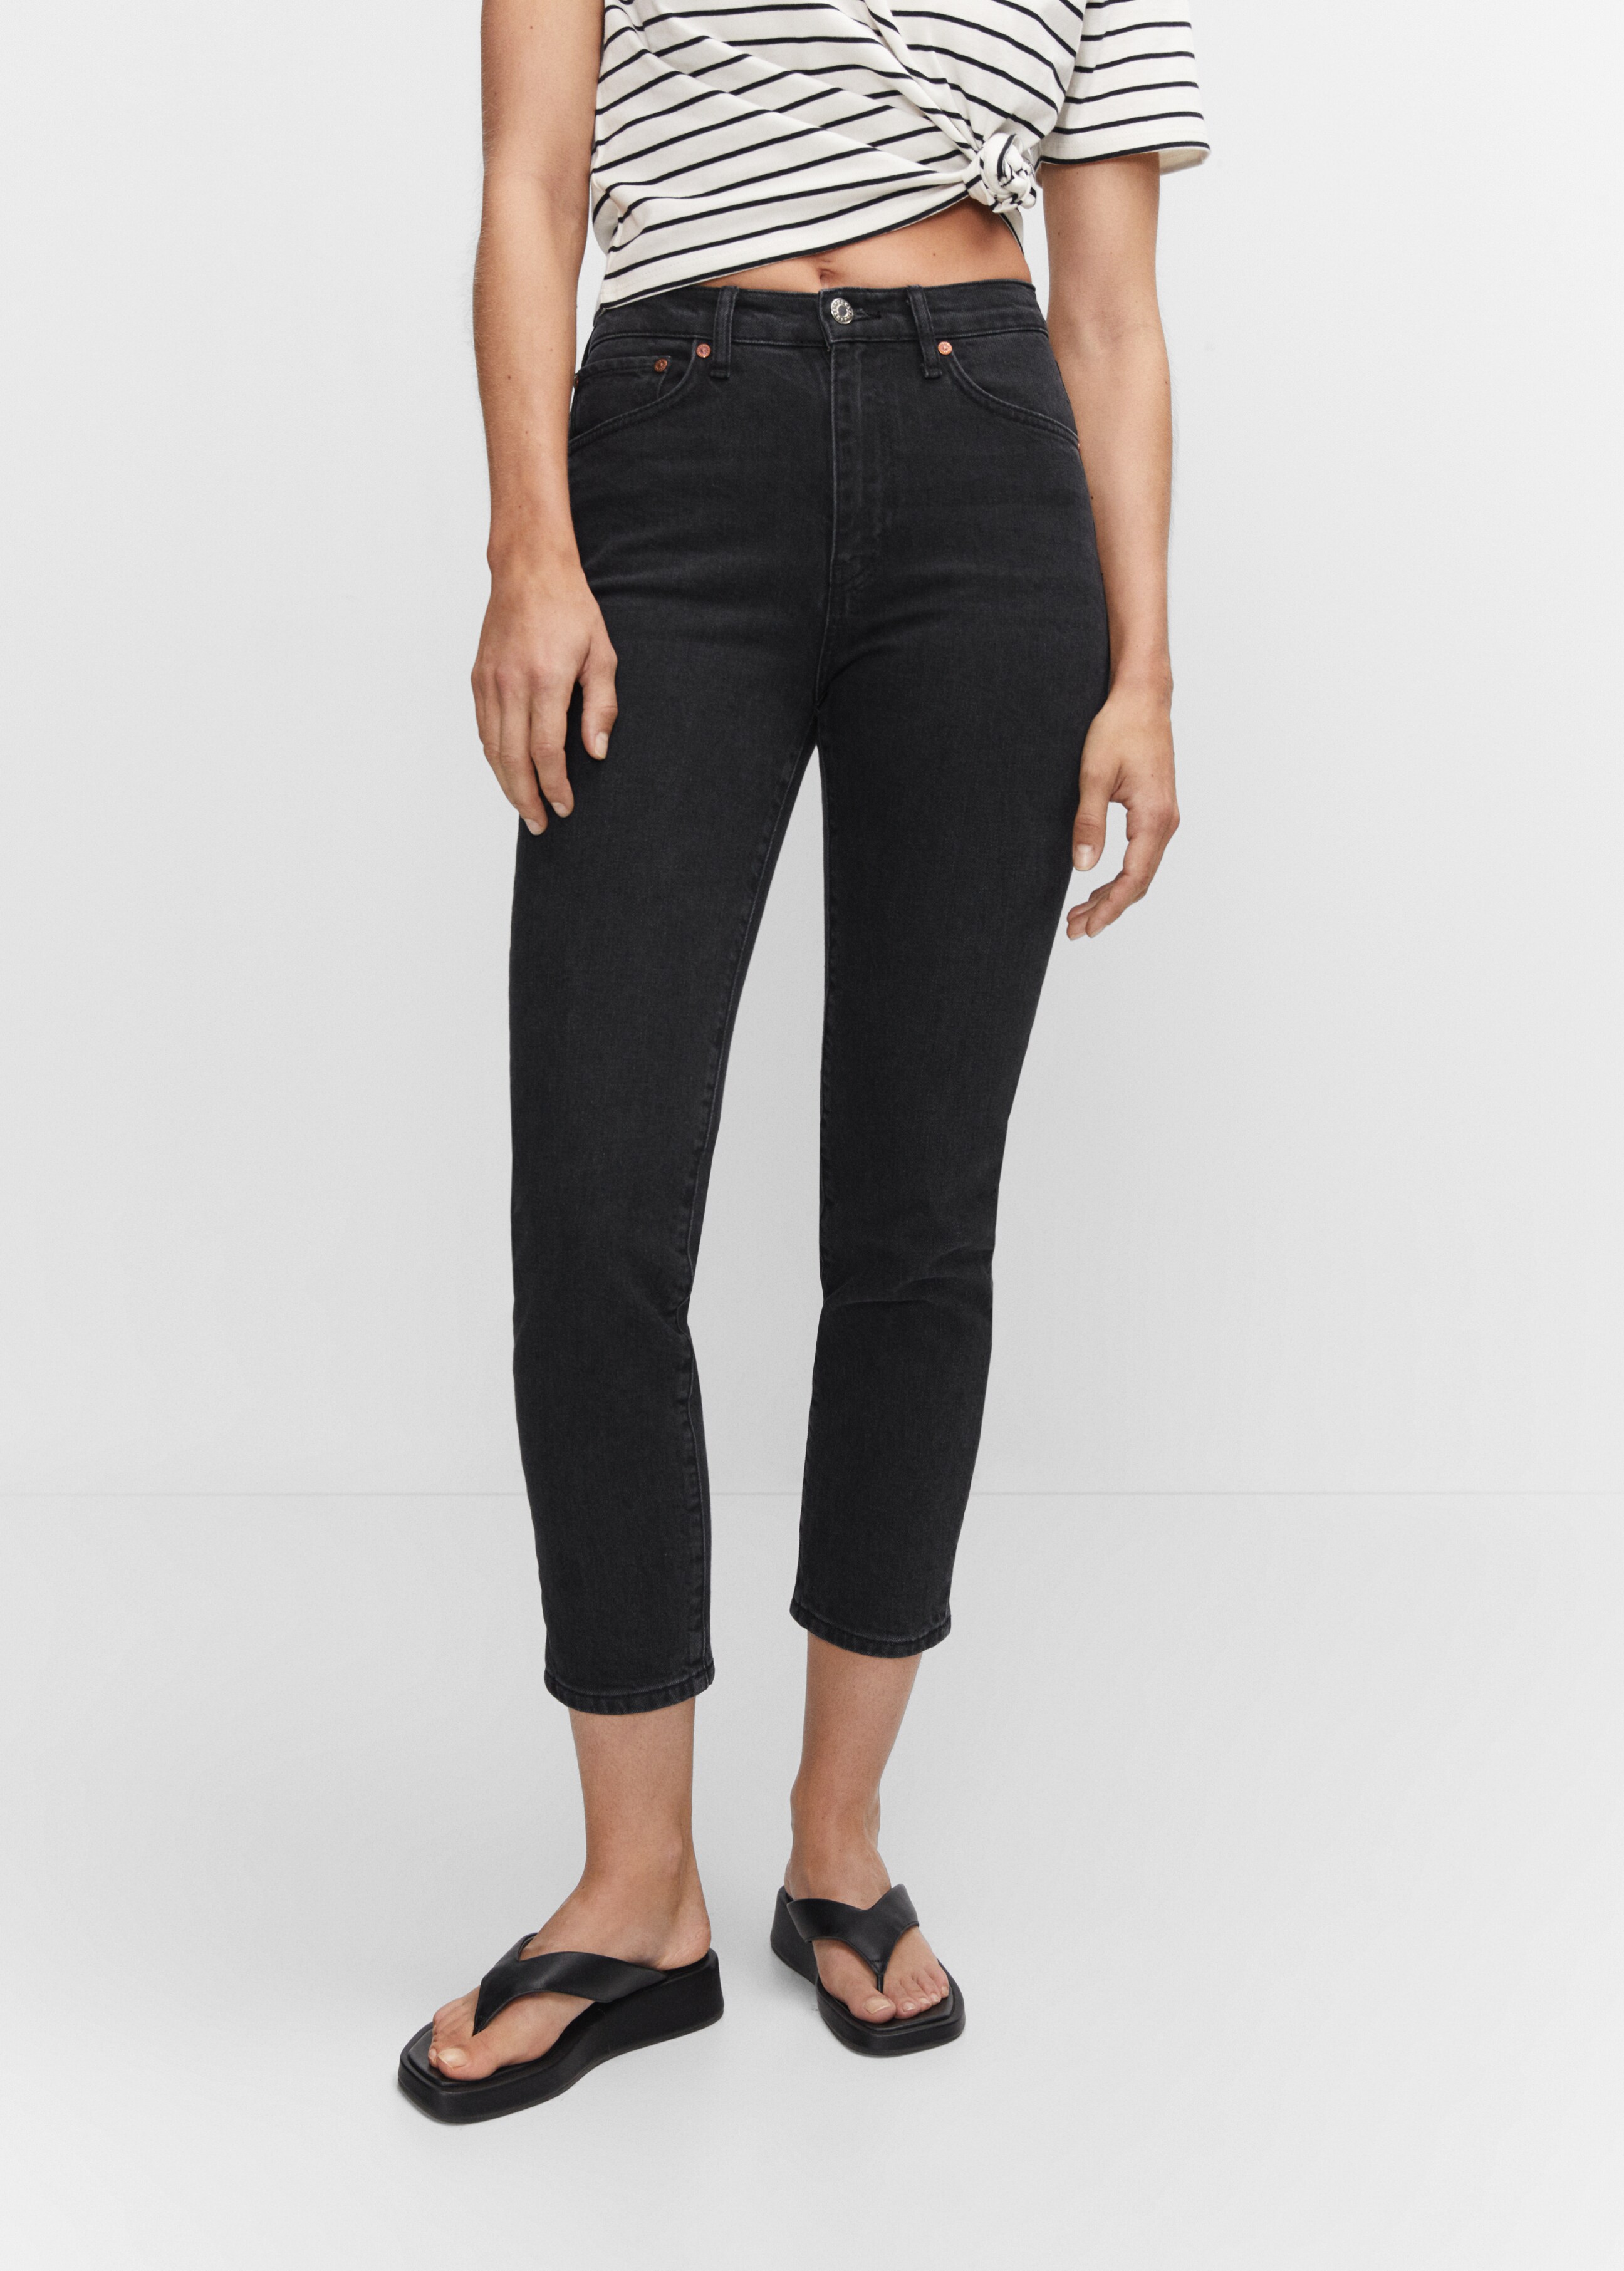 Jeans slim cropped - Plano médio